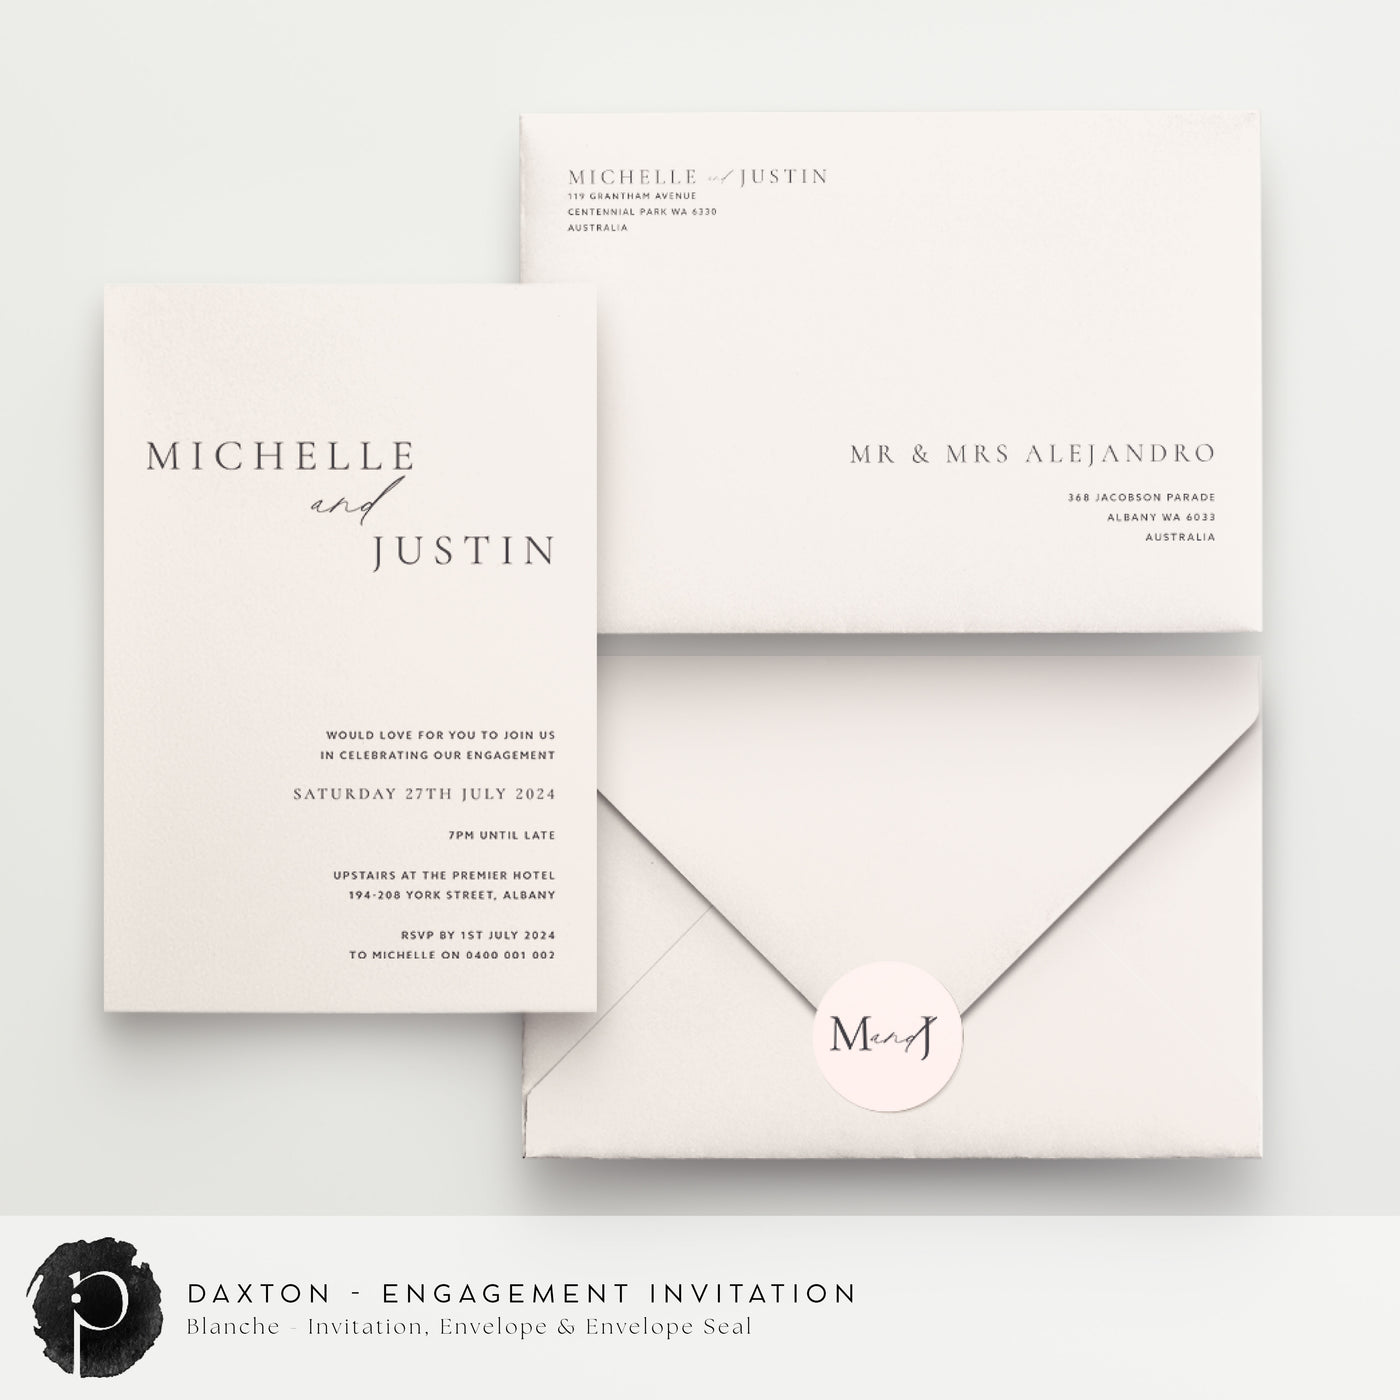 Daxton - Engagement Invitations